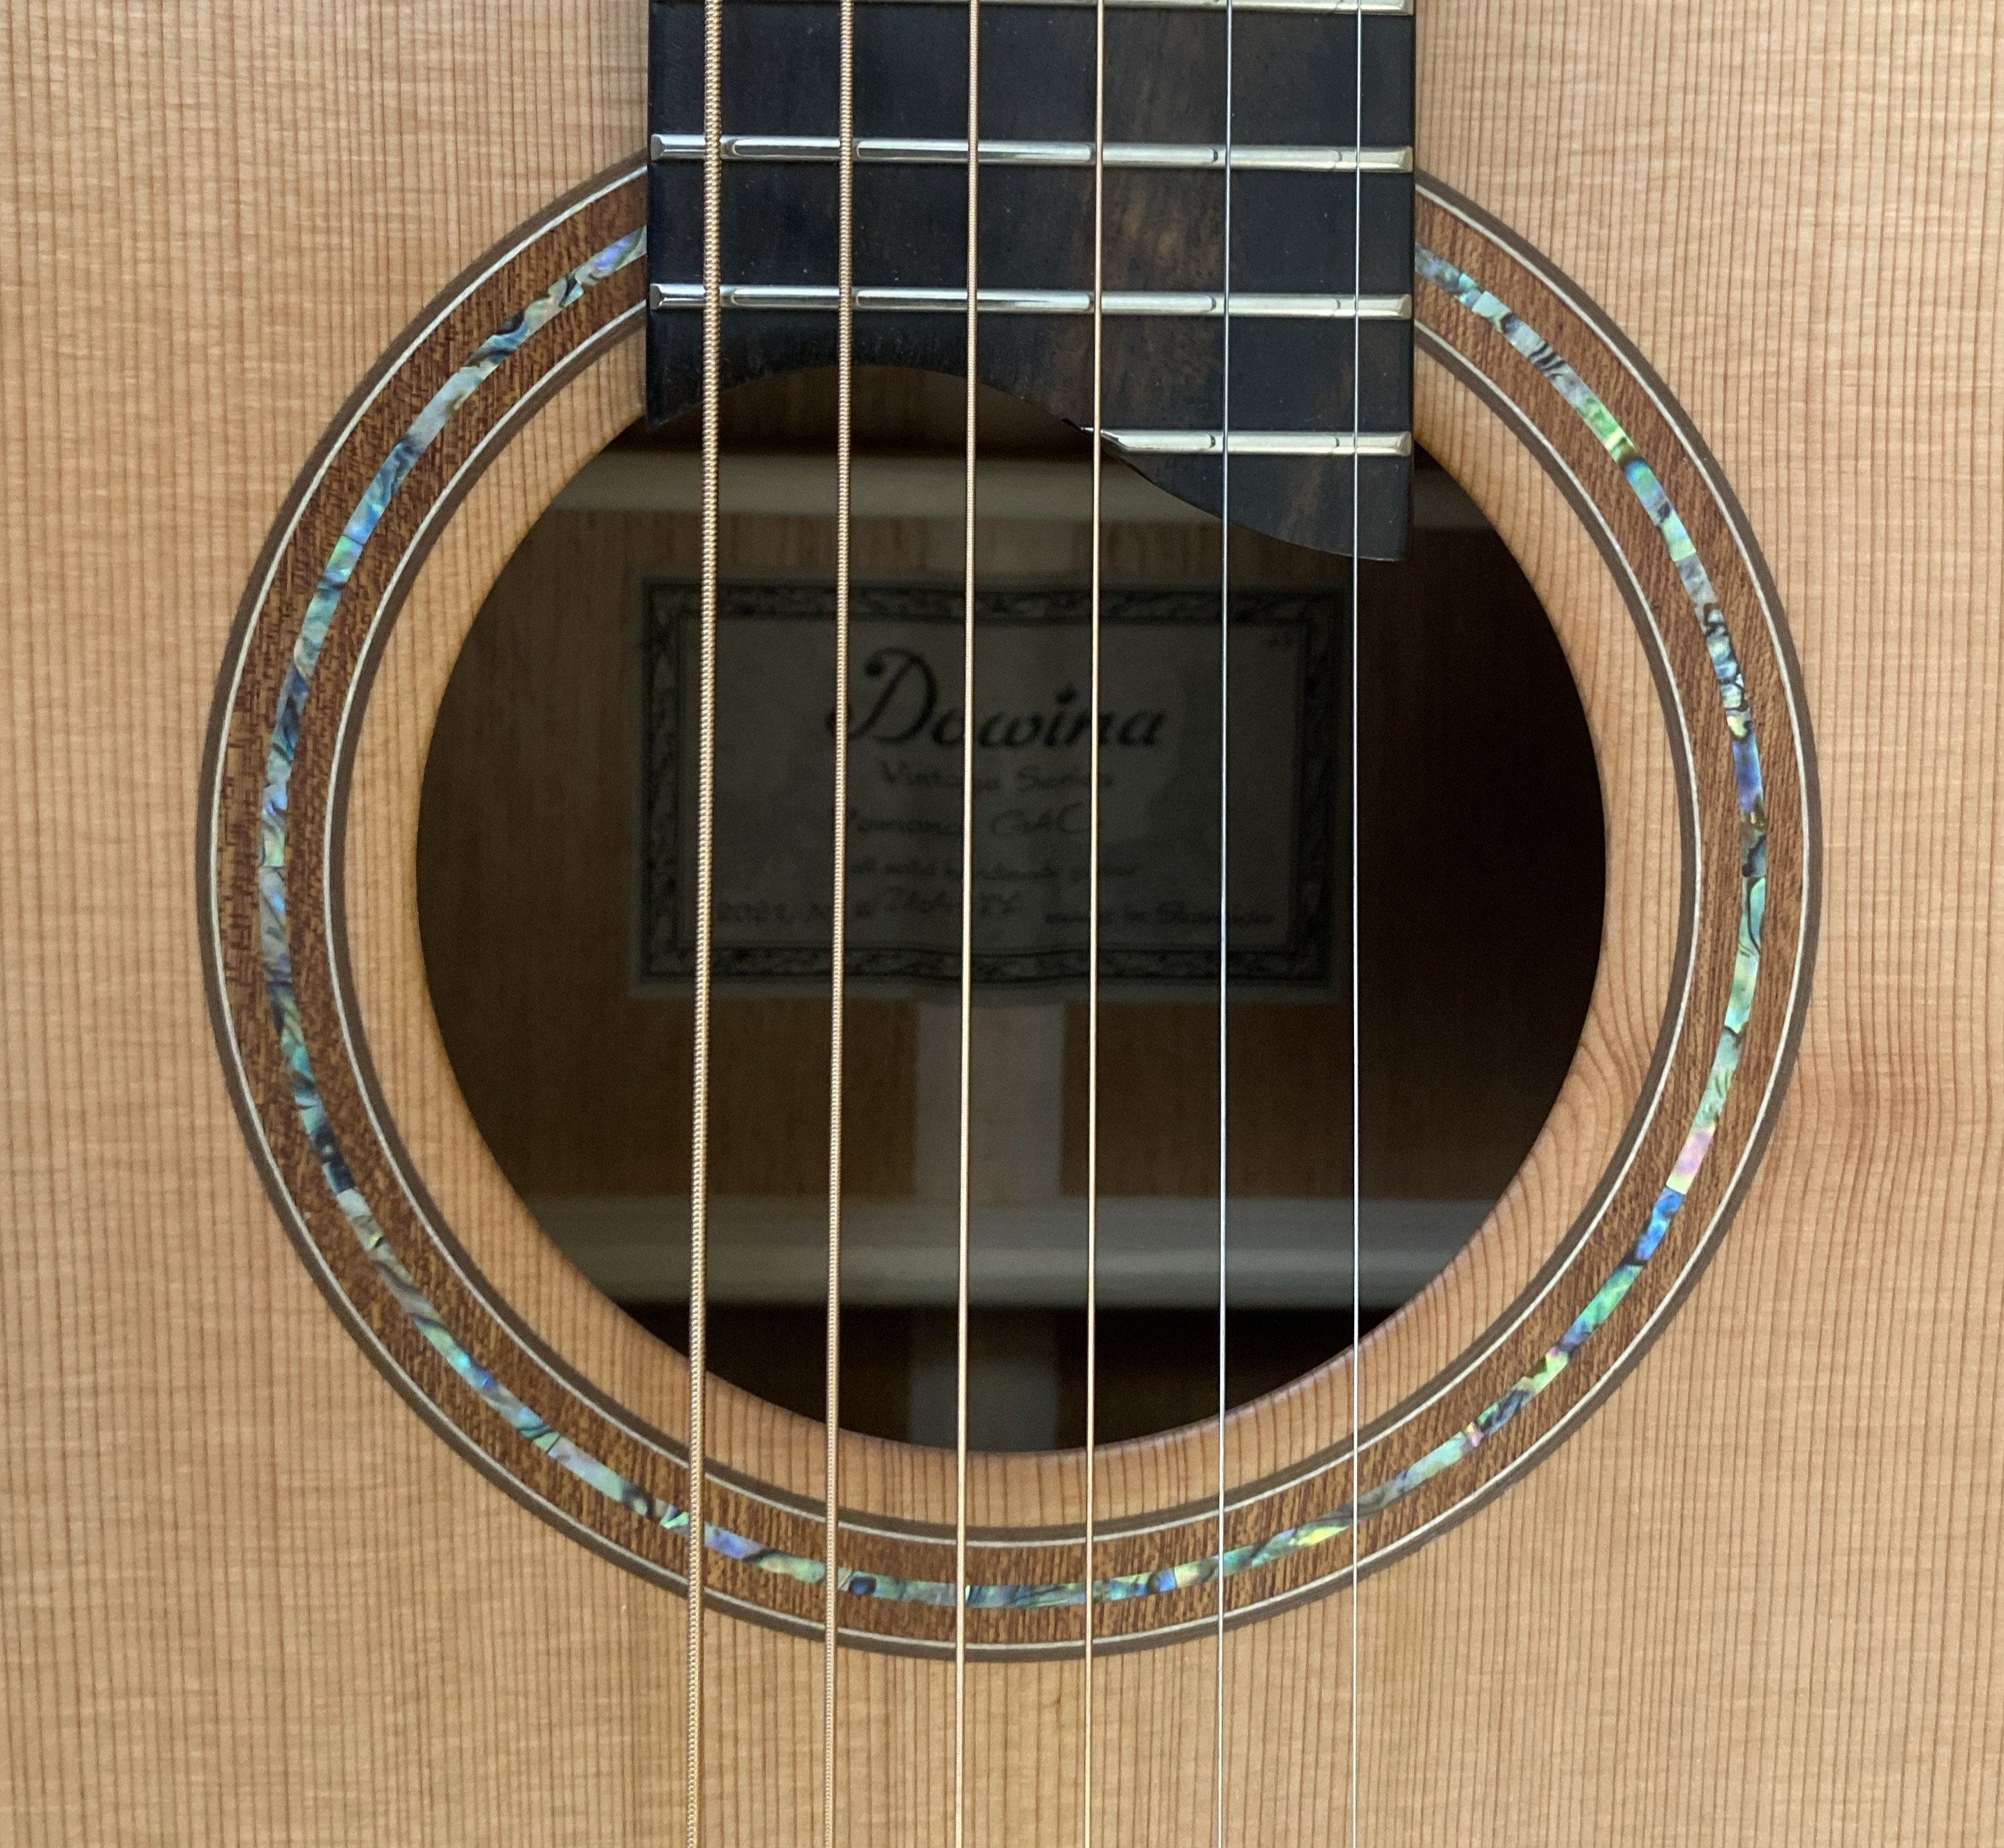 Dowina Mahogany GAC, Acoustic Guitar for sale at Richards Guitars.